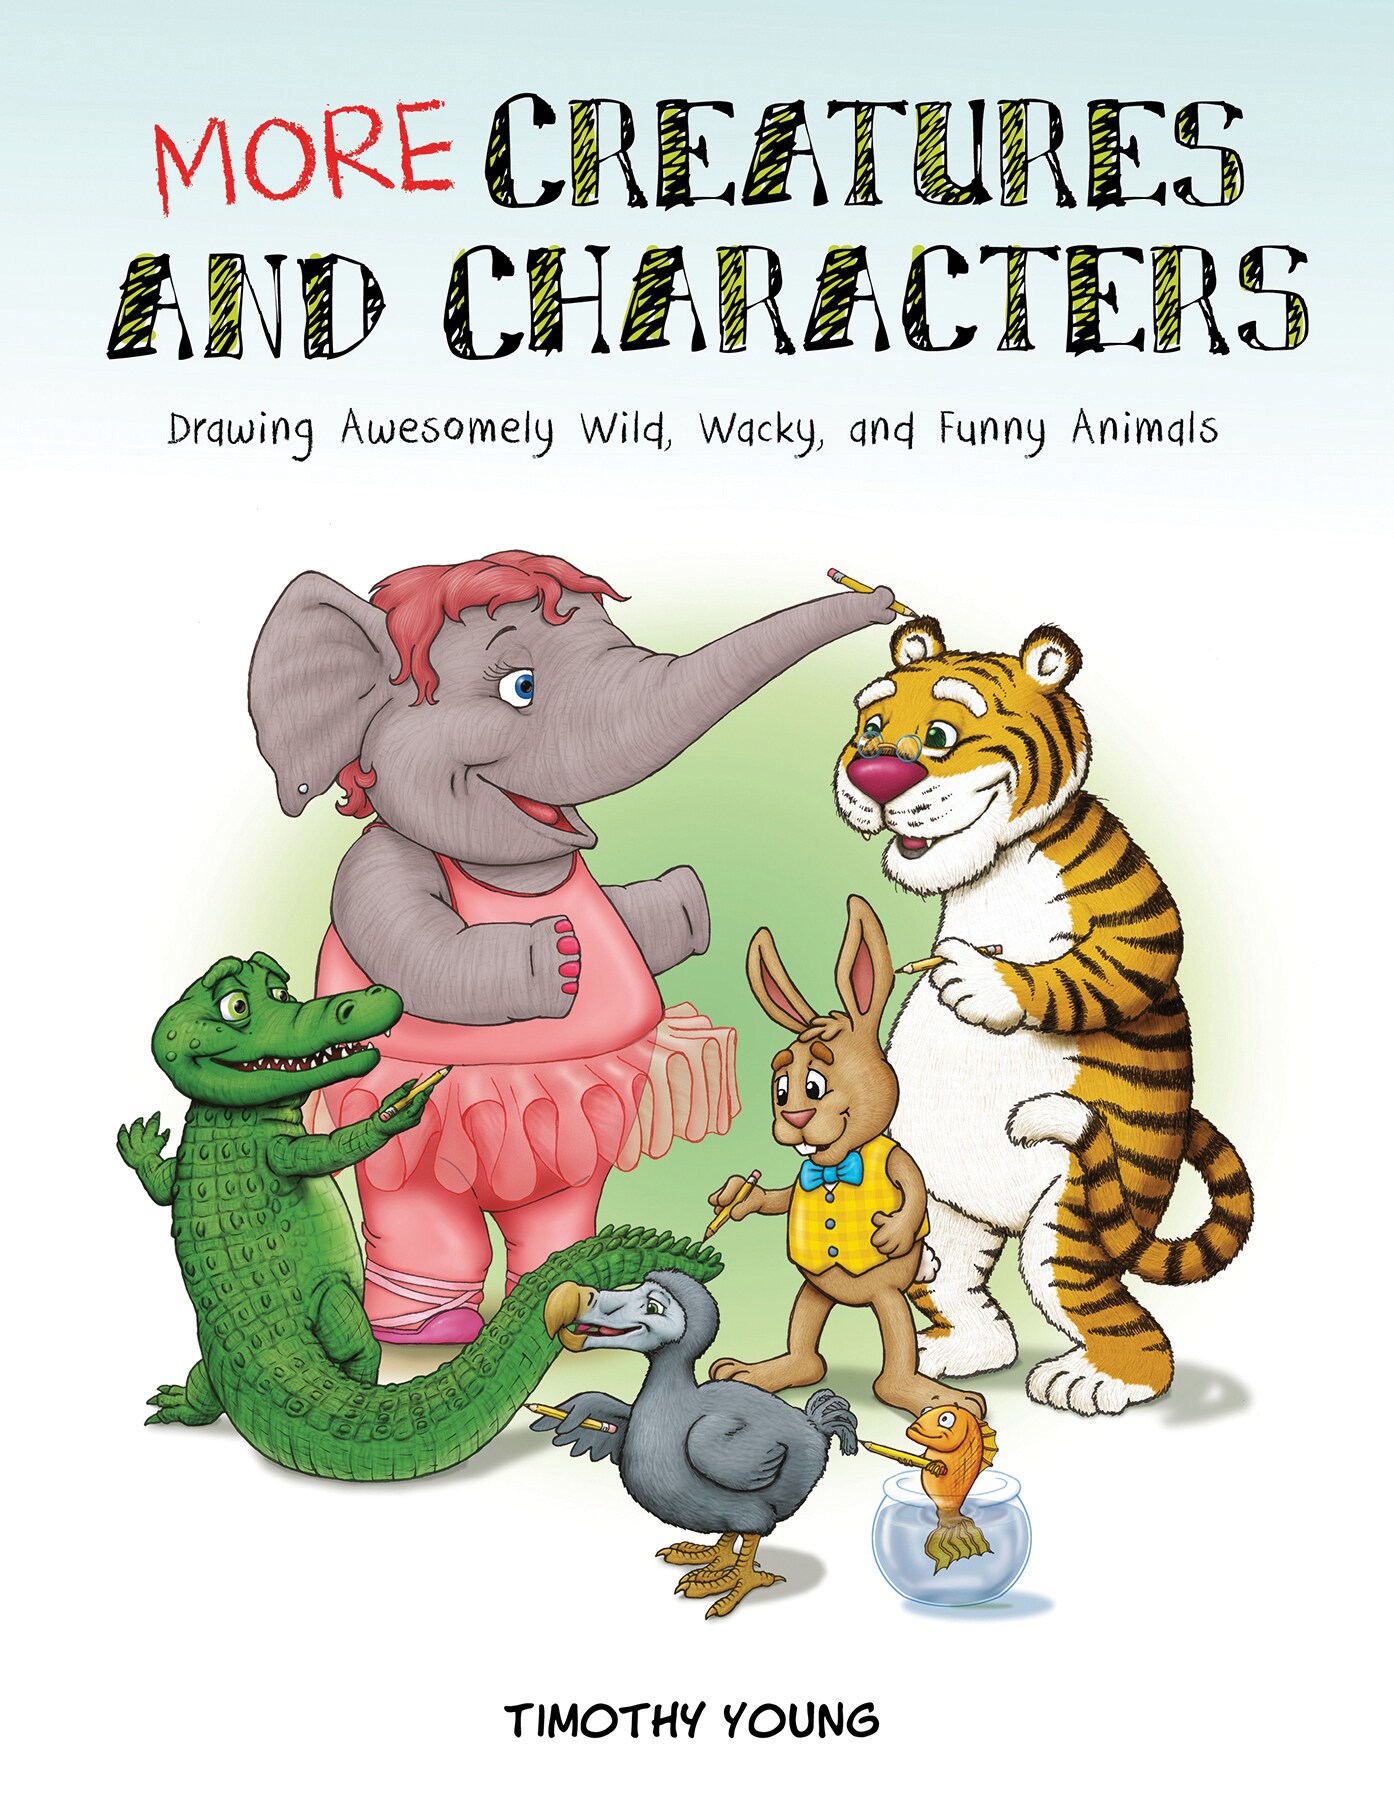 Arteza® Kids Land Animals Coloring Book Kit